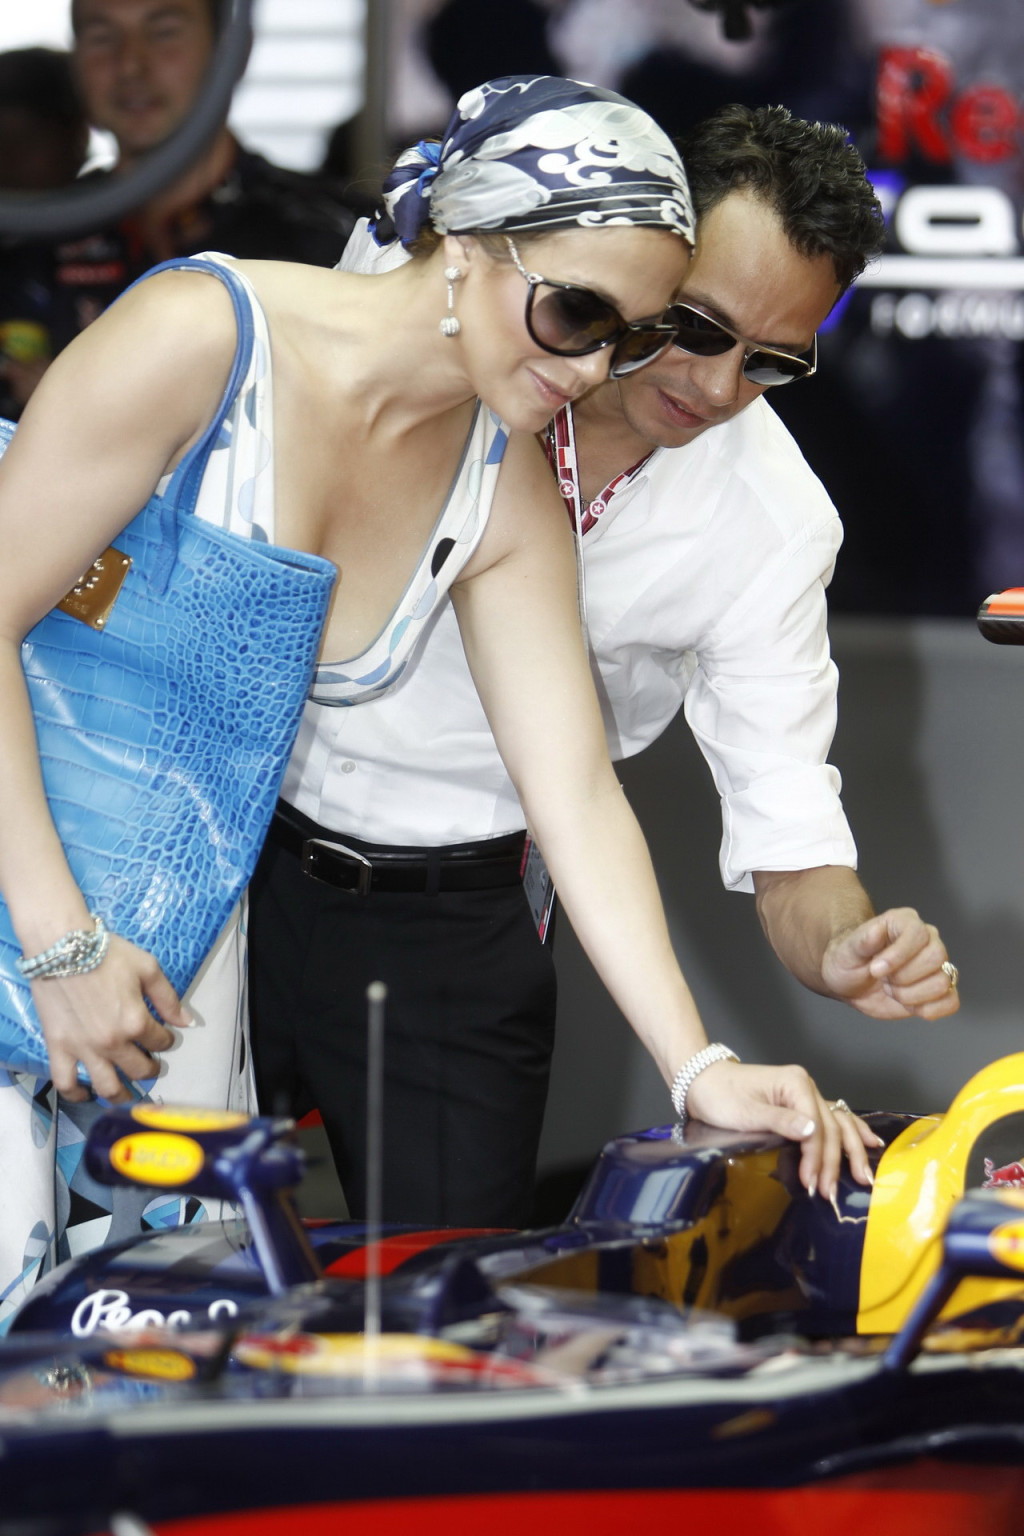 Jennifer Lopez braless showing nice cleavage in Monaco at Formula 1 GP #75349229